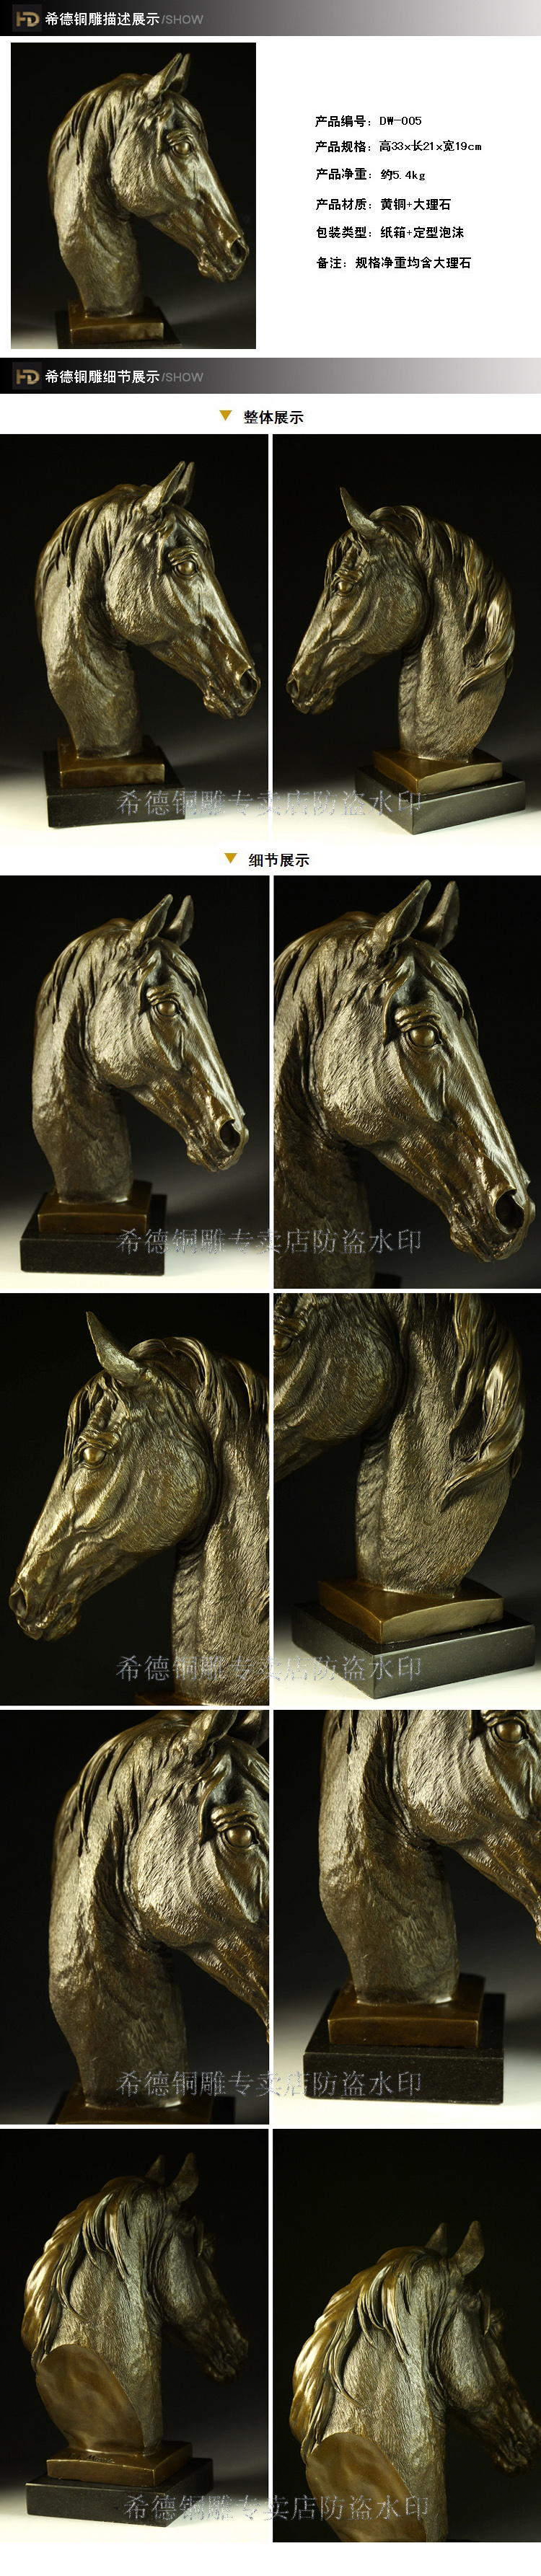 Bronze sculpture, copper sculpture animal copper gangnam crafts quality gift dw-005